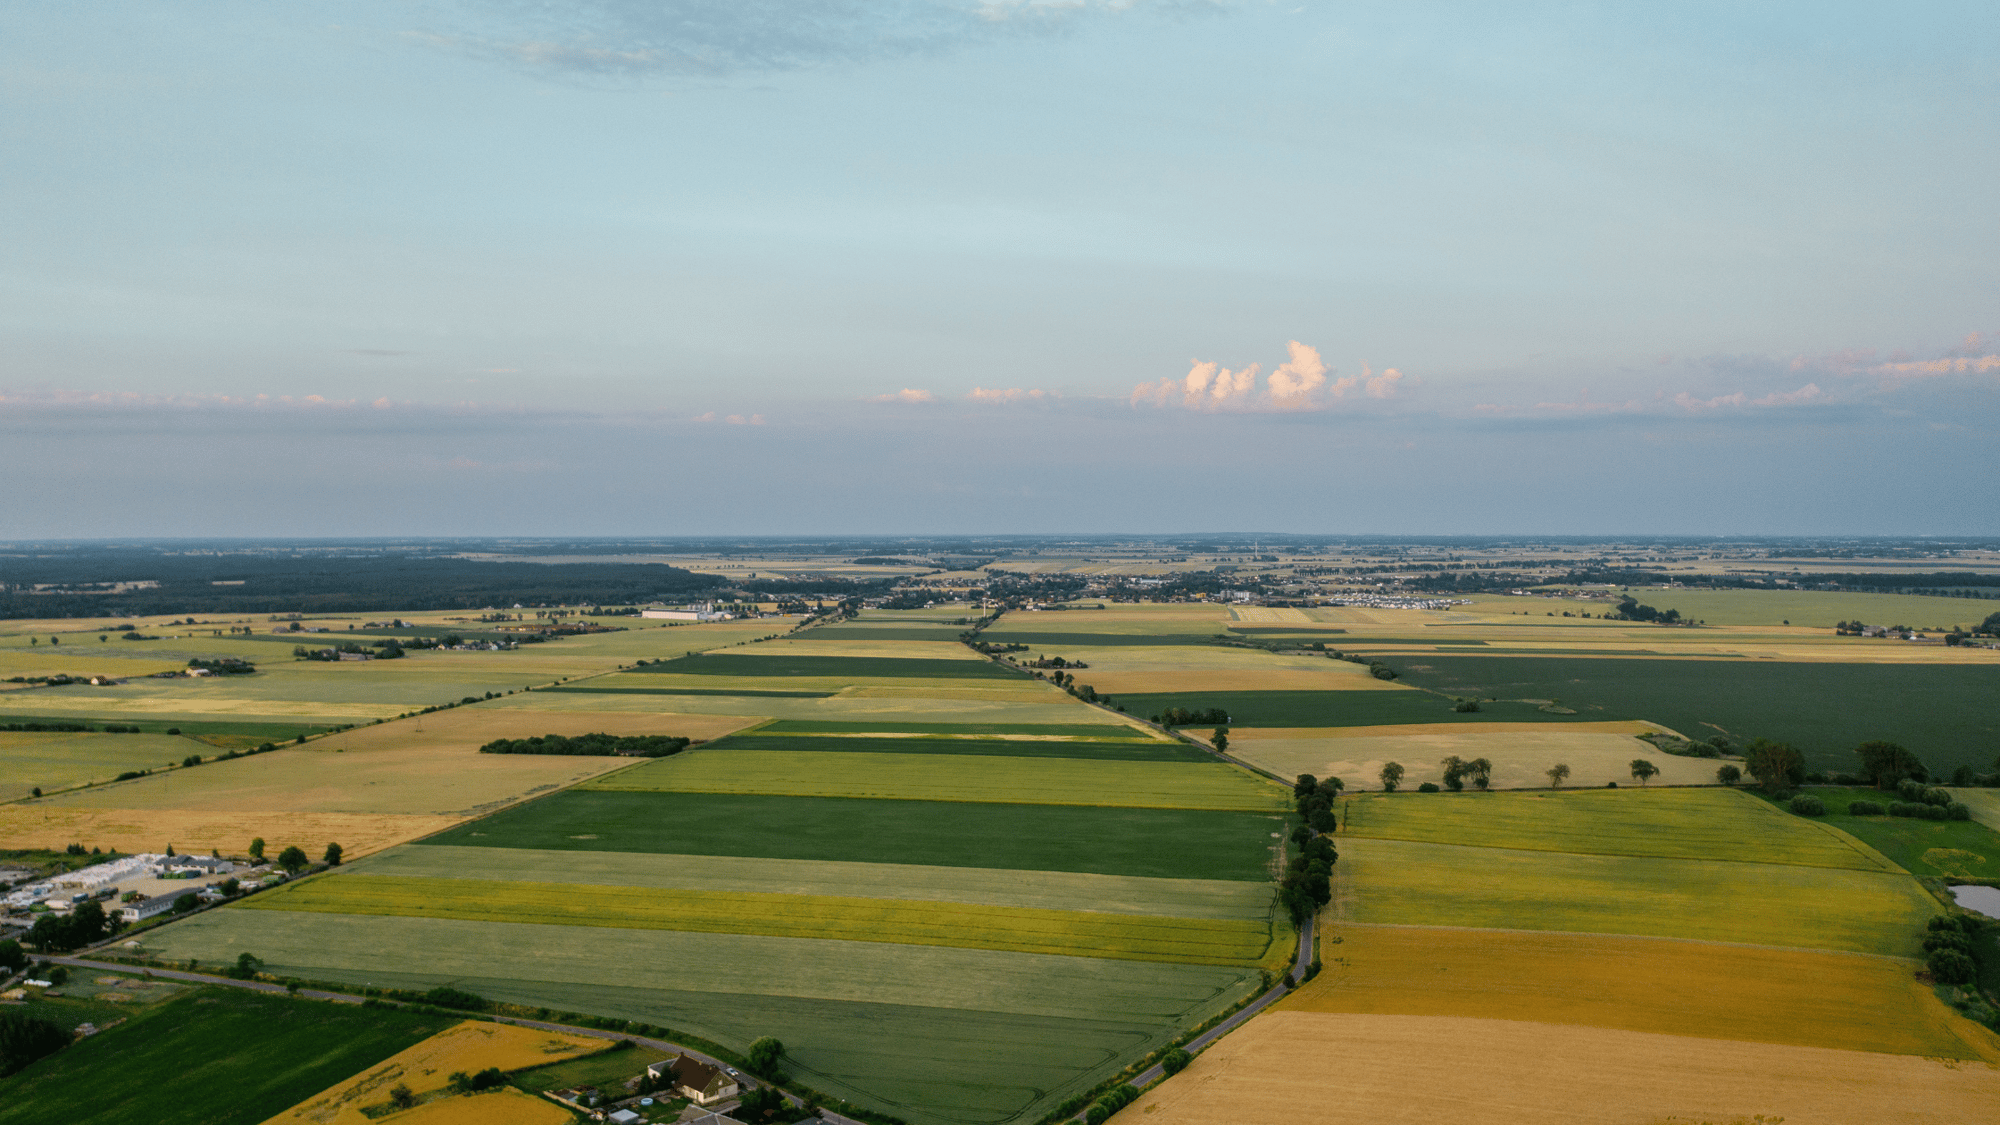 aerial view of farm fields